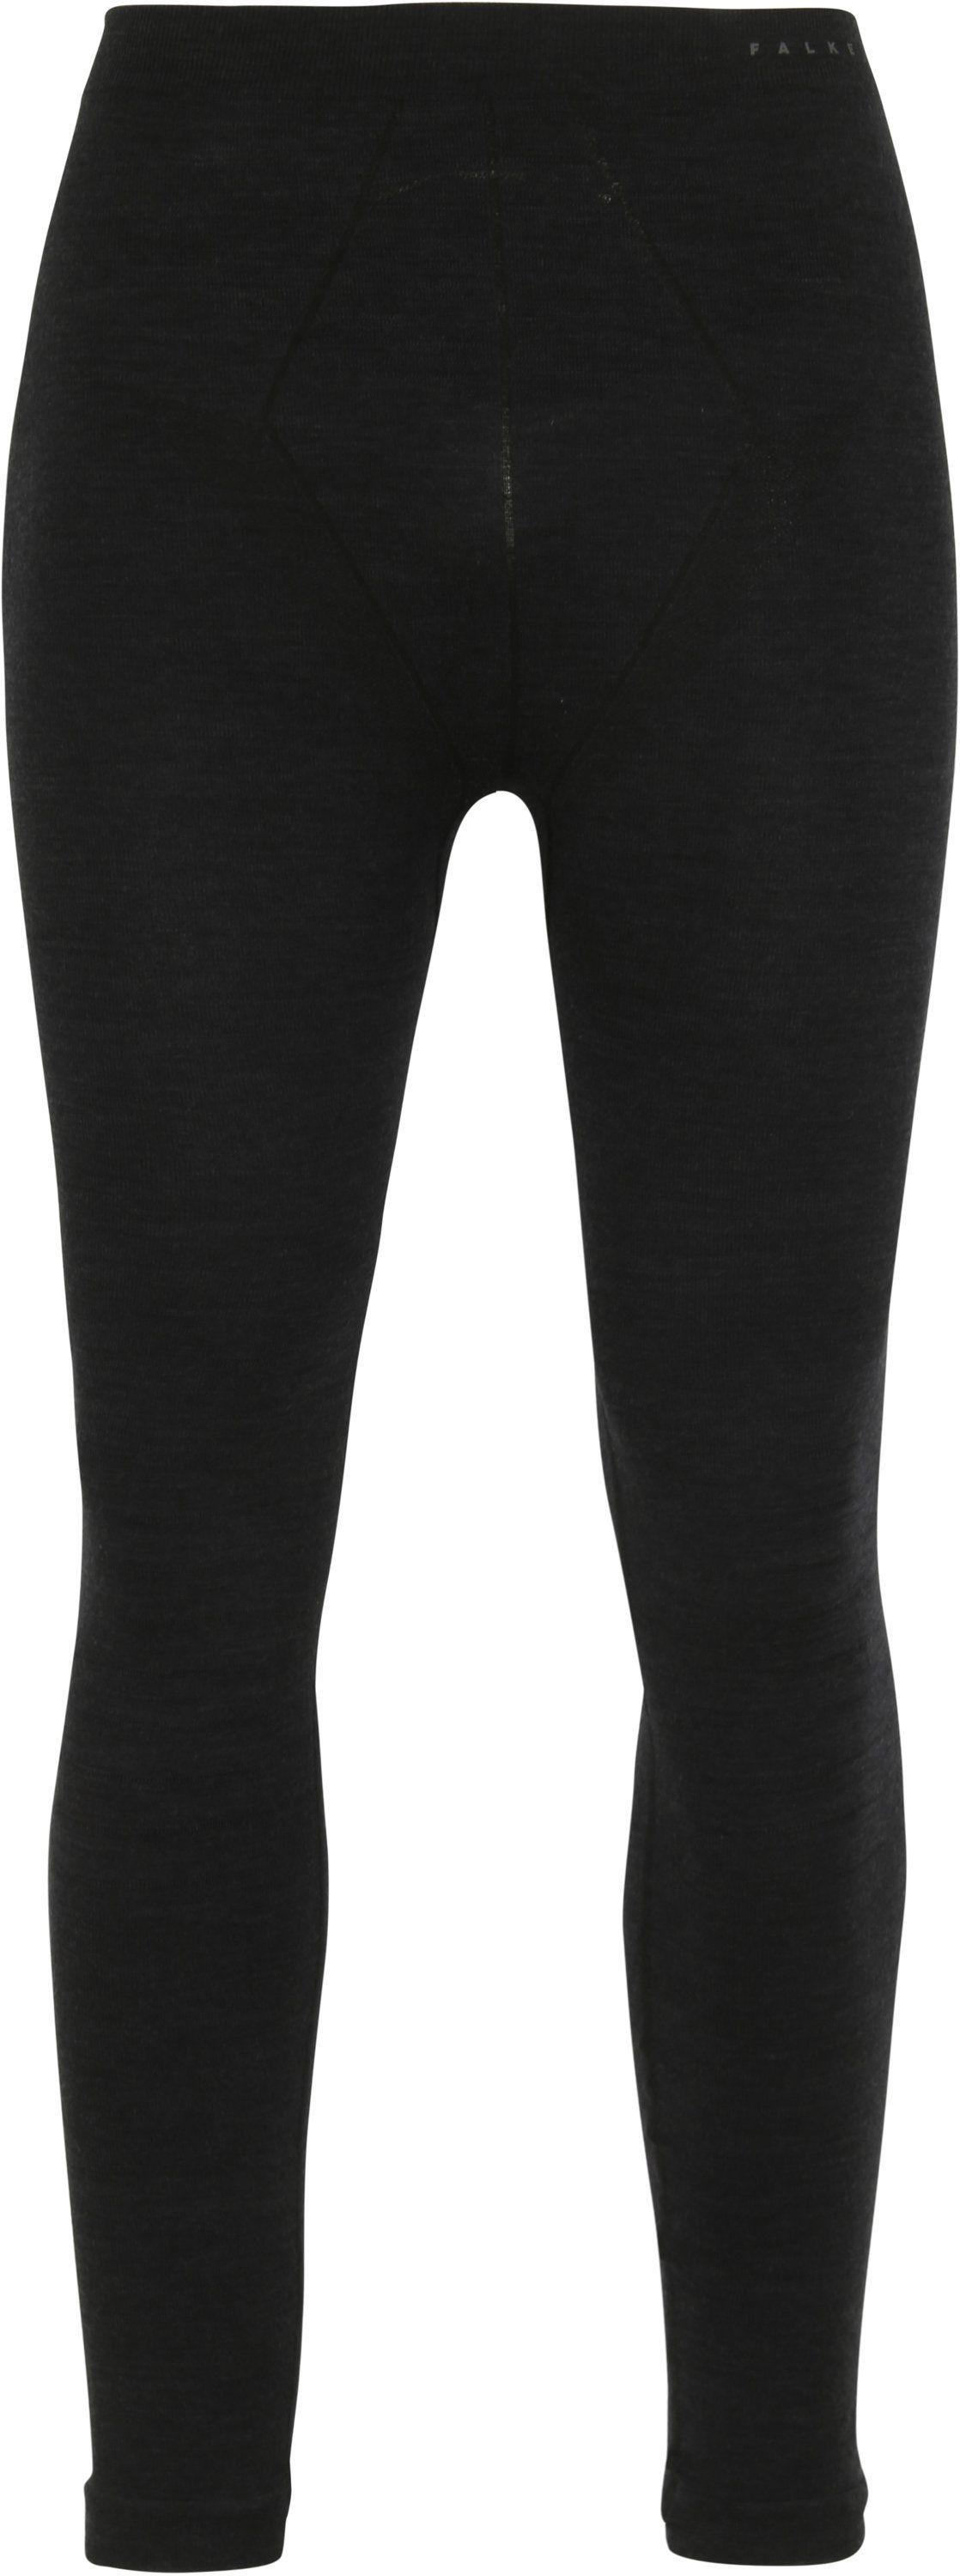 Falke Thermal Trousers Black size L